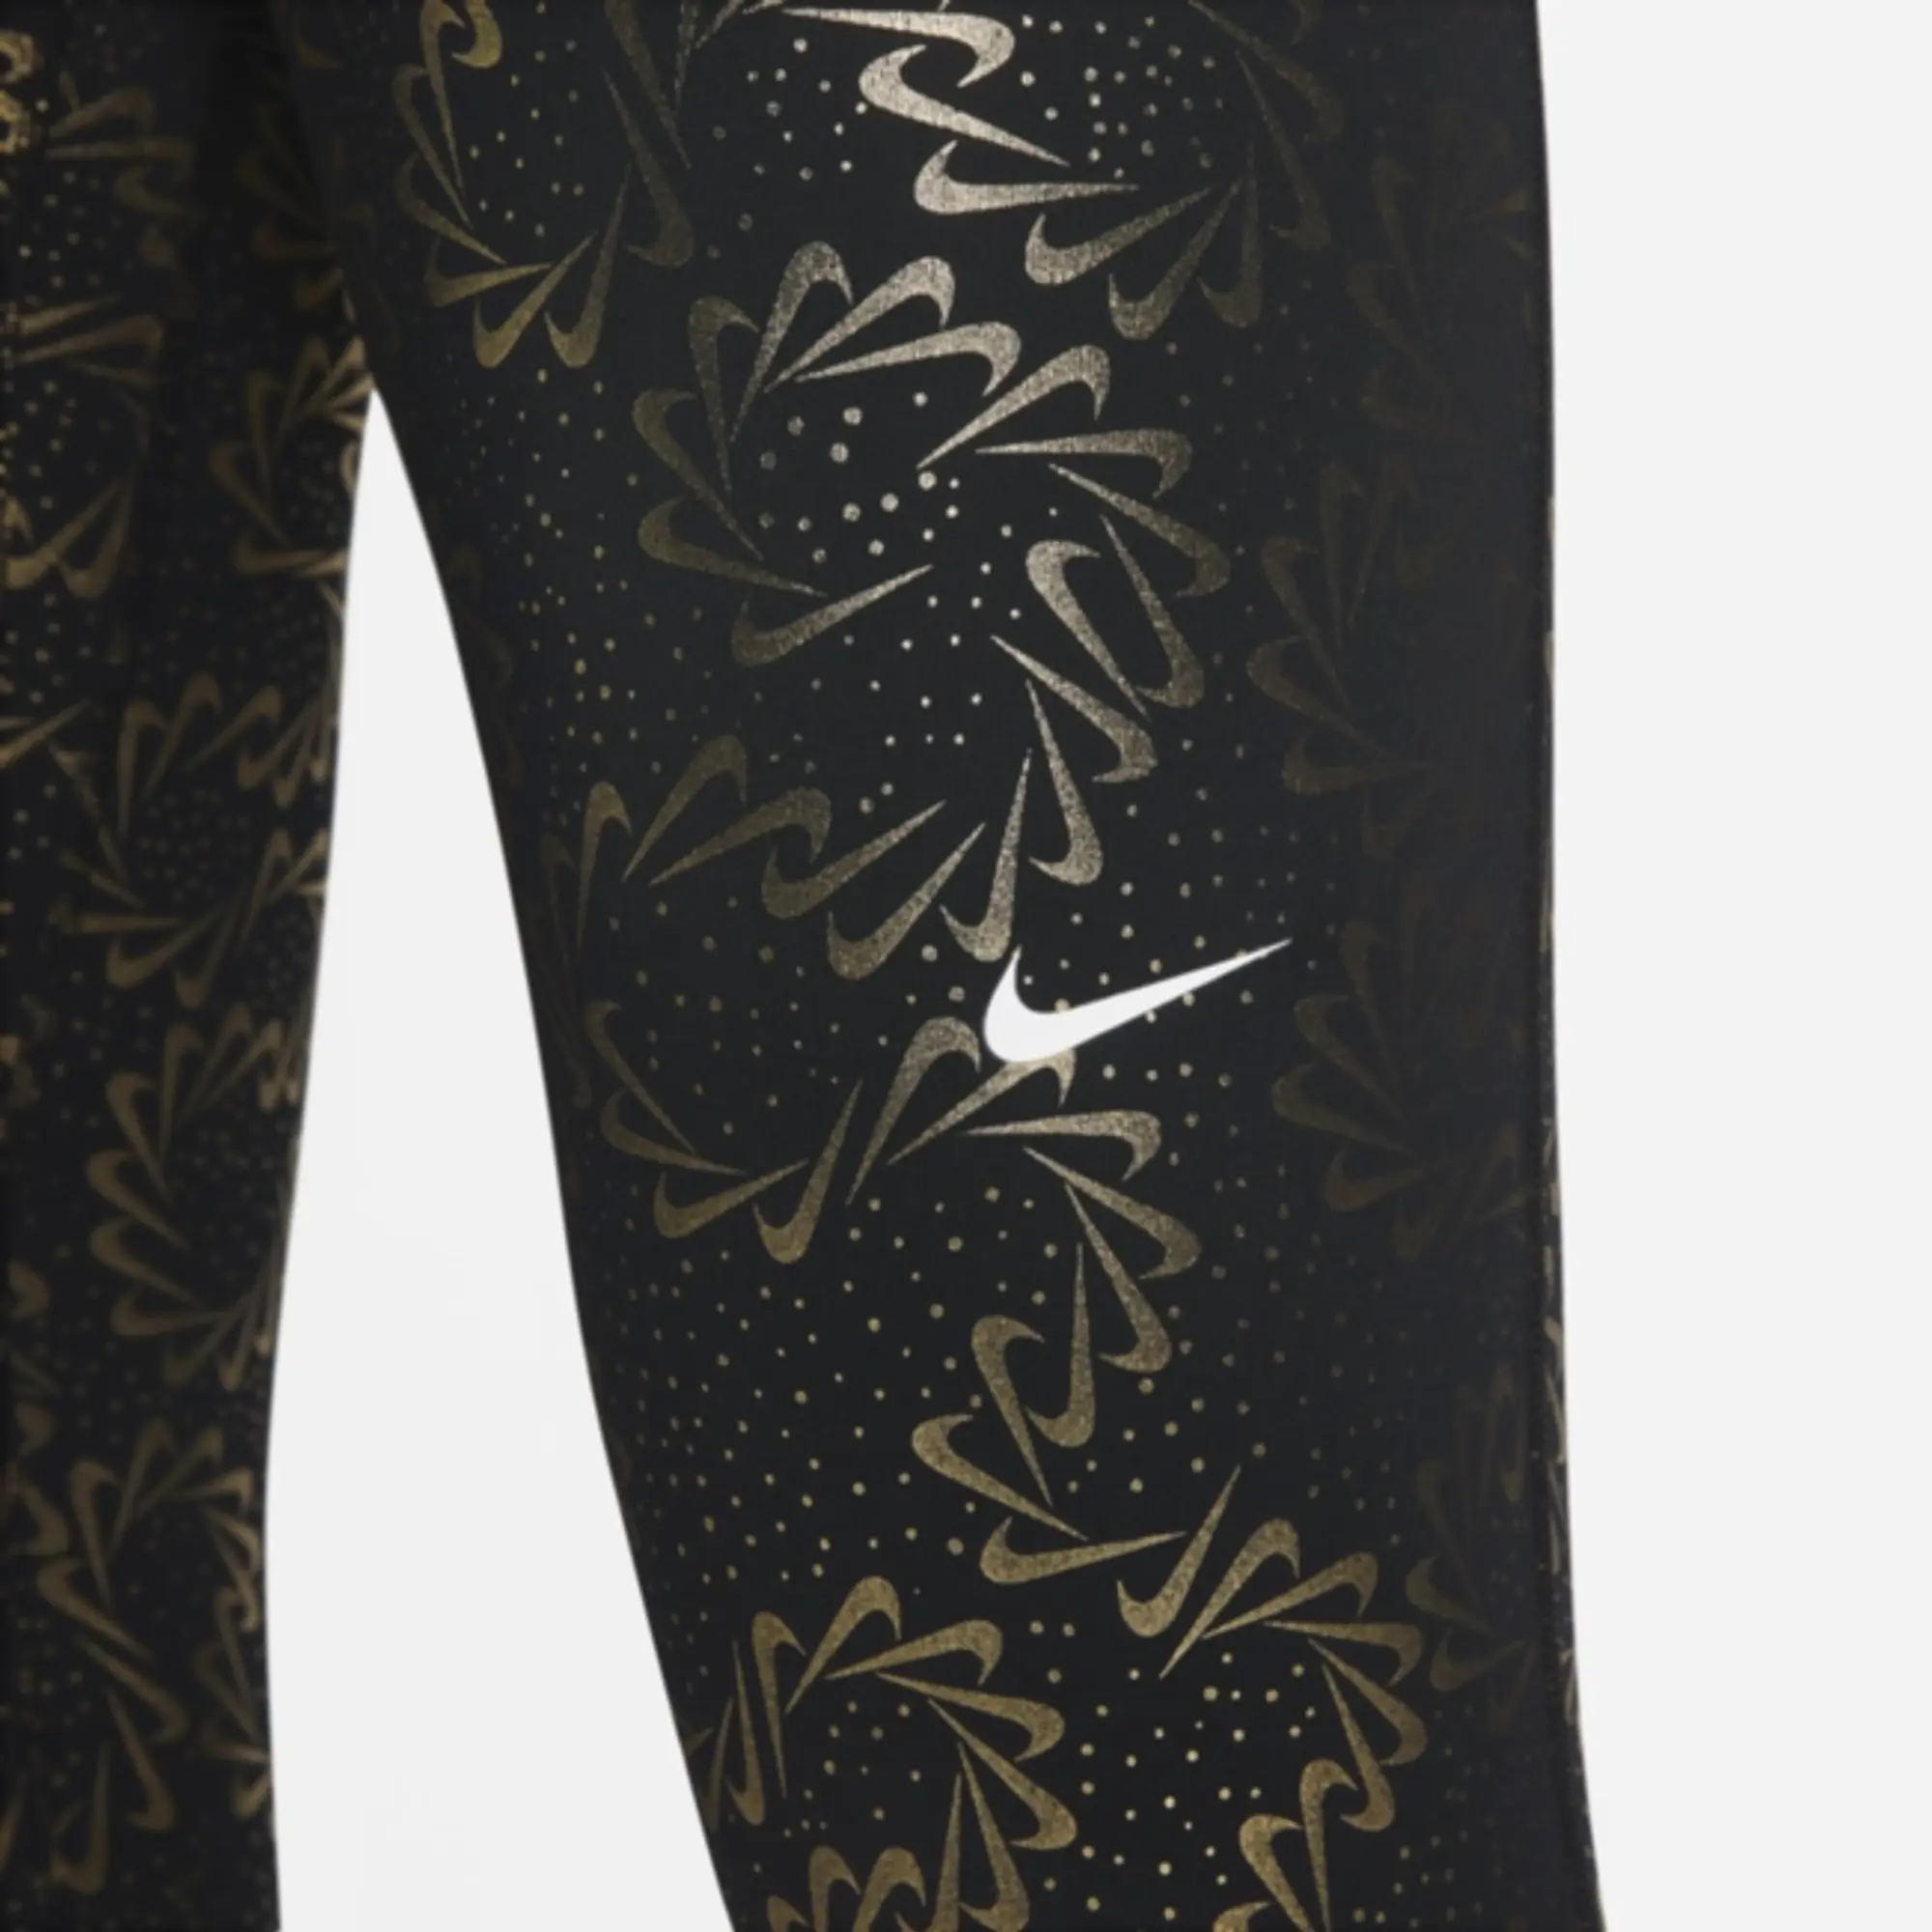 Nike Pro Leggings in Black/Gold and Black/White